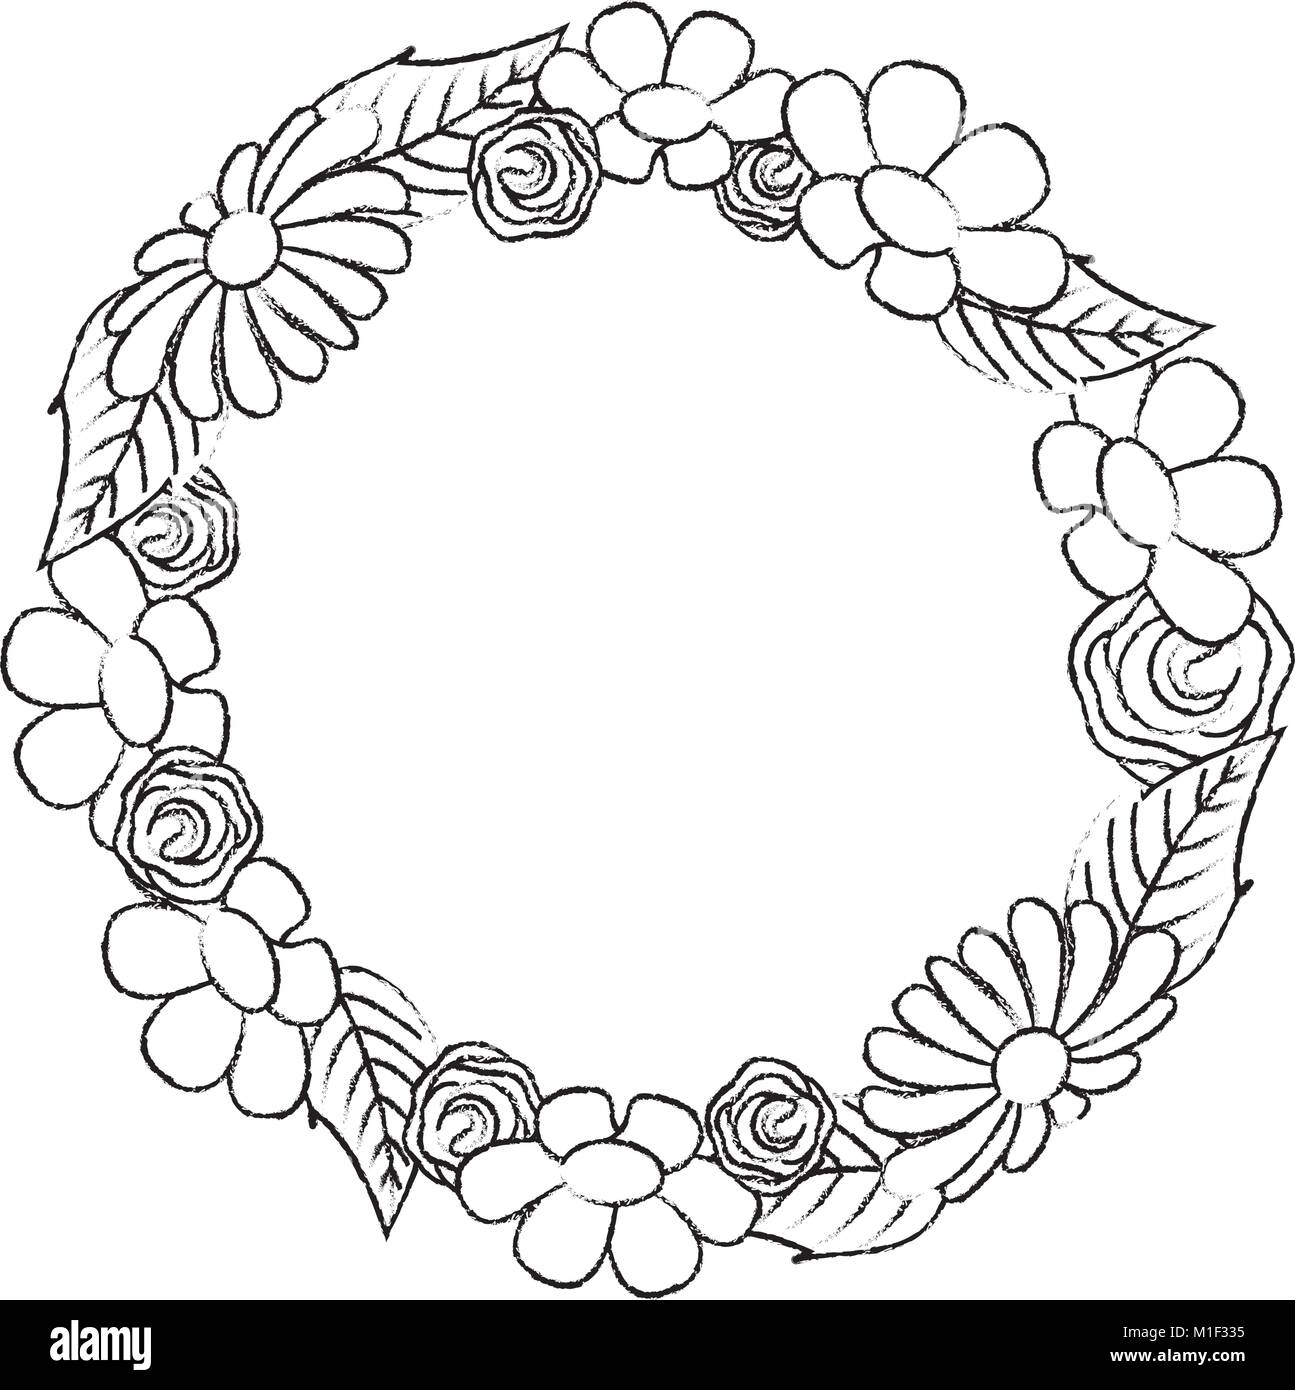 Free Vector  Hand drawn floral circular frame set